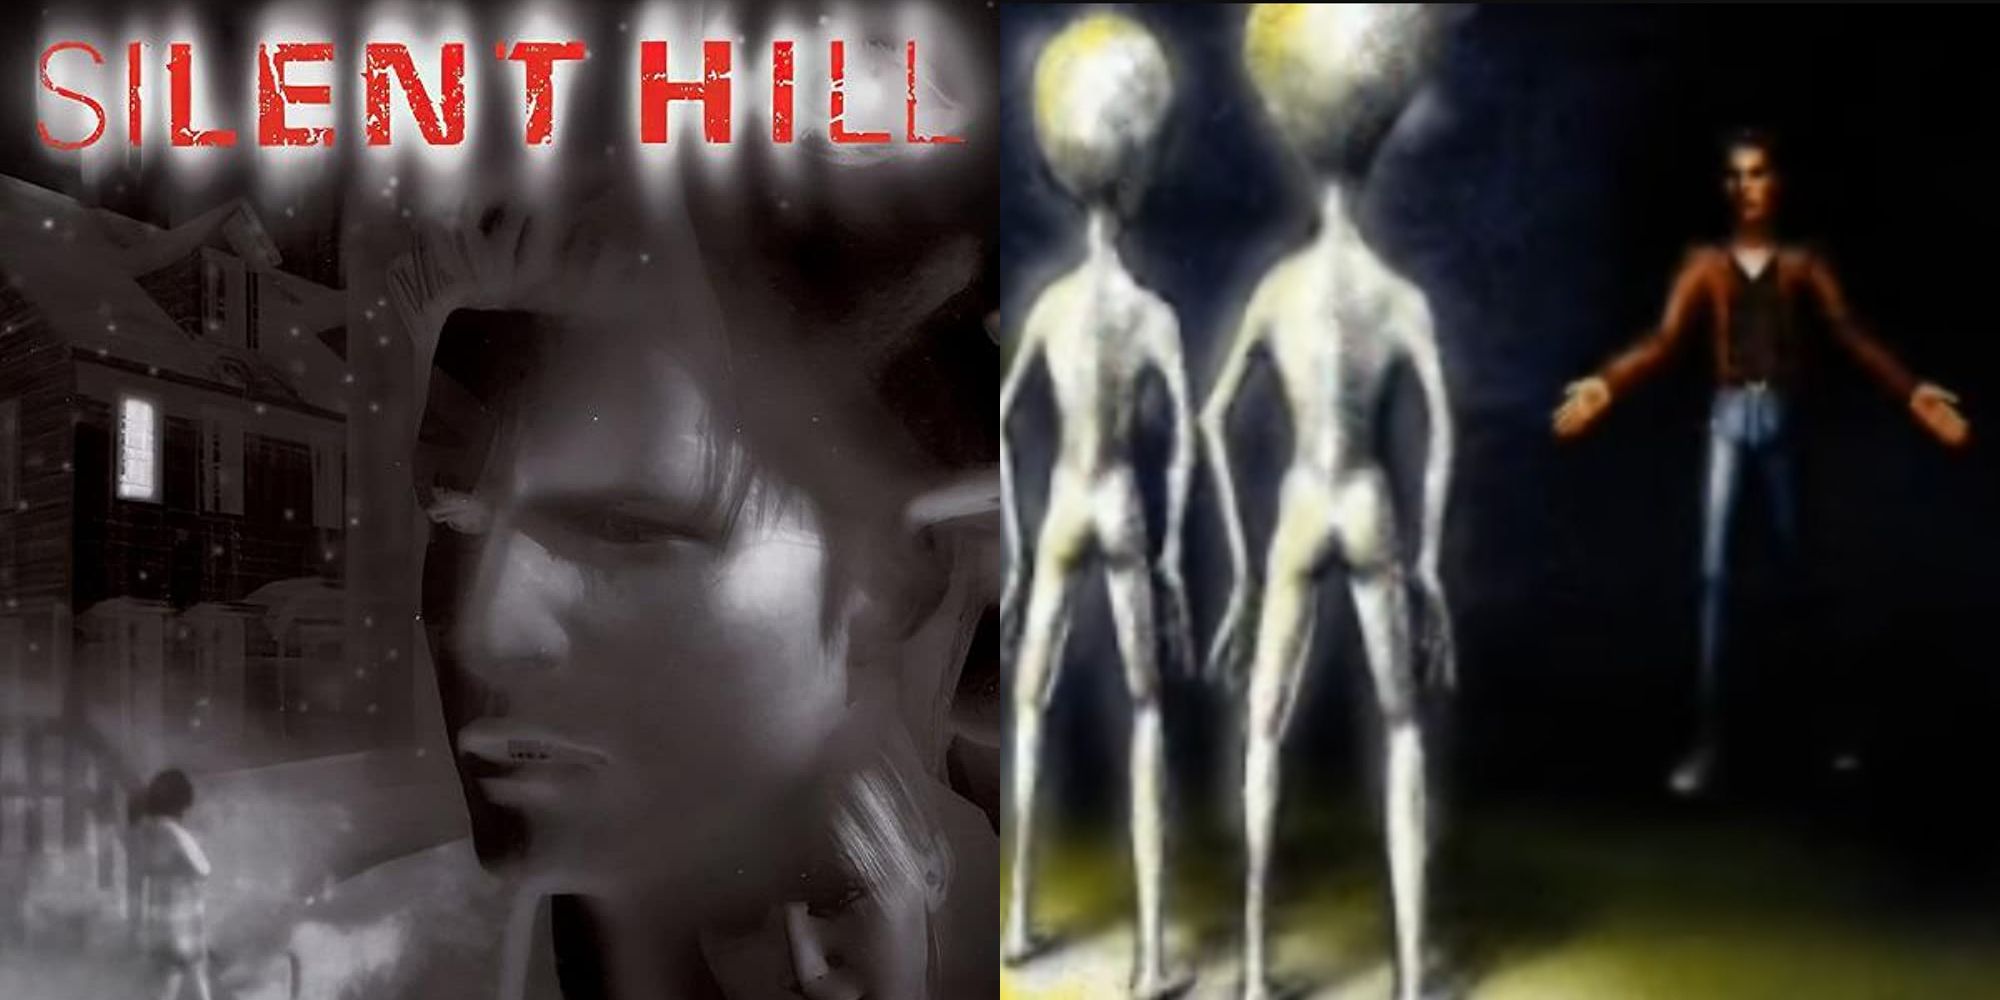 konami horror ps1 silent hill titlecard cover art